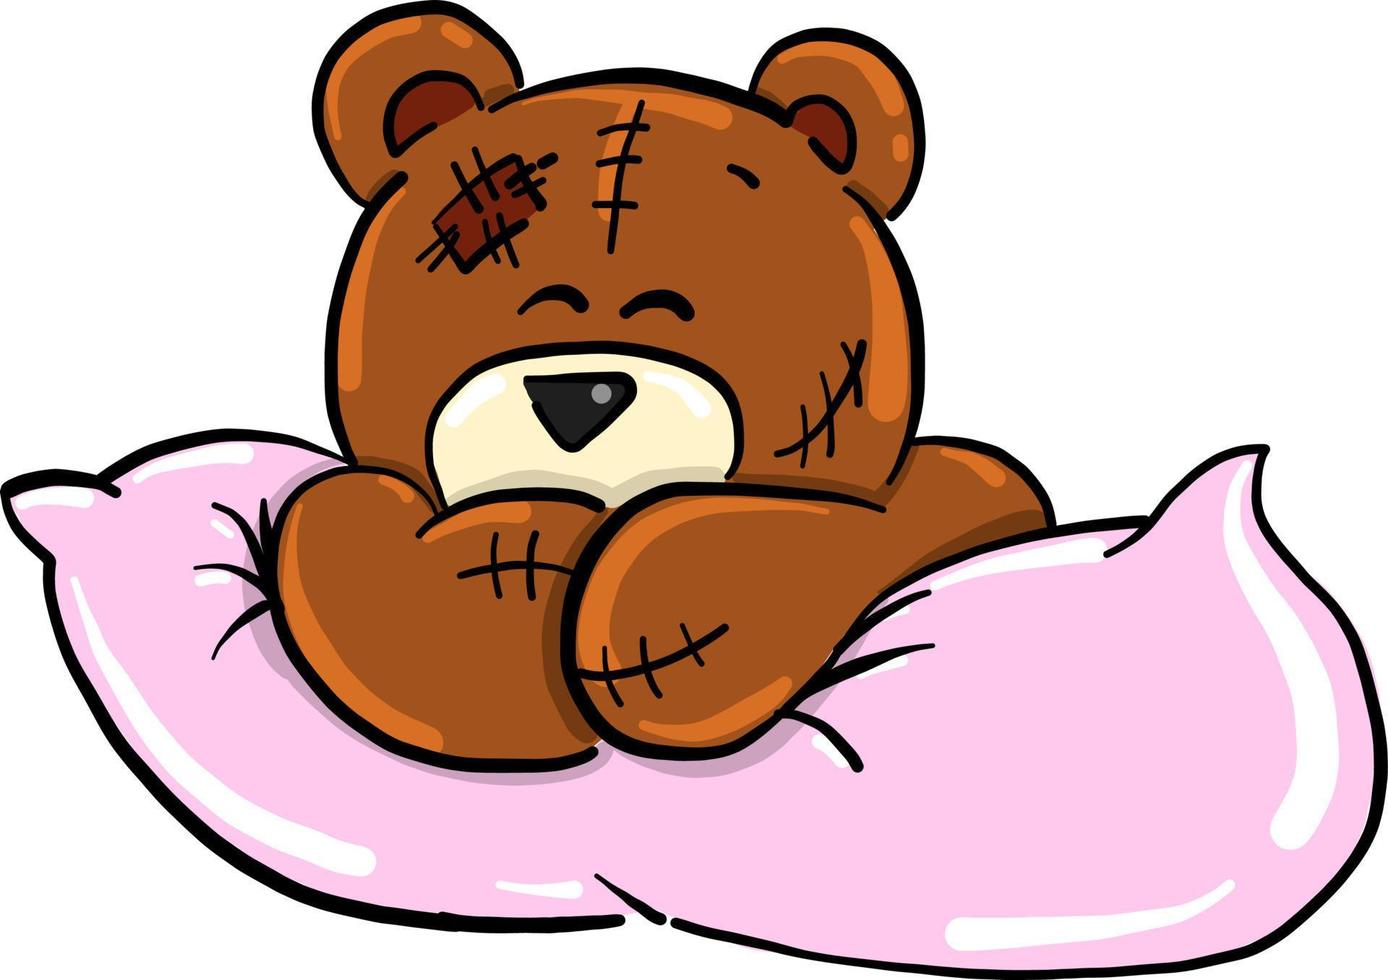 Sleeping bear, illustration, vector on white background